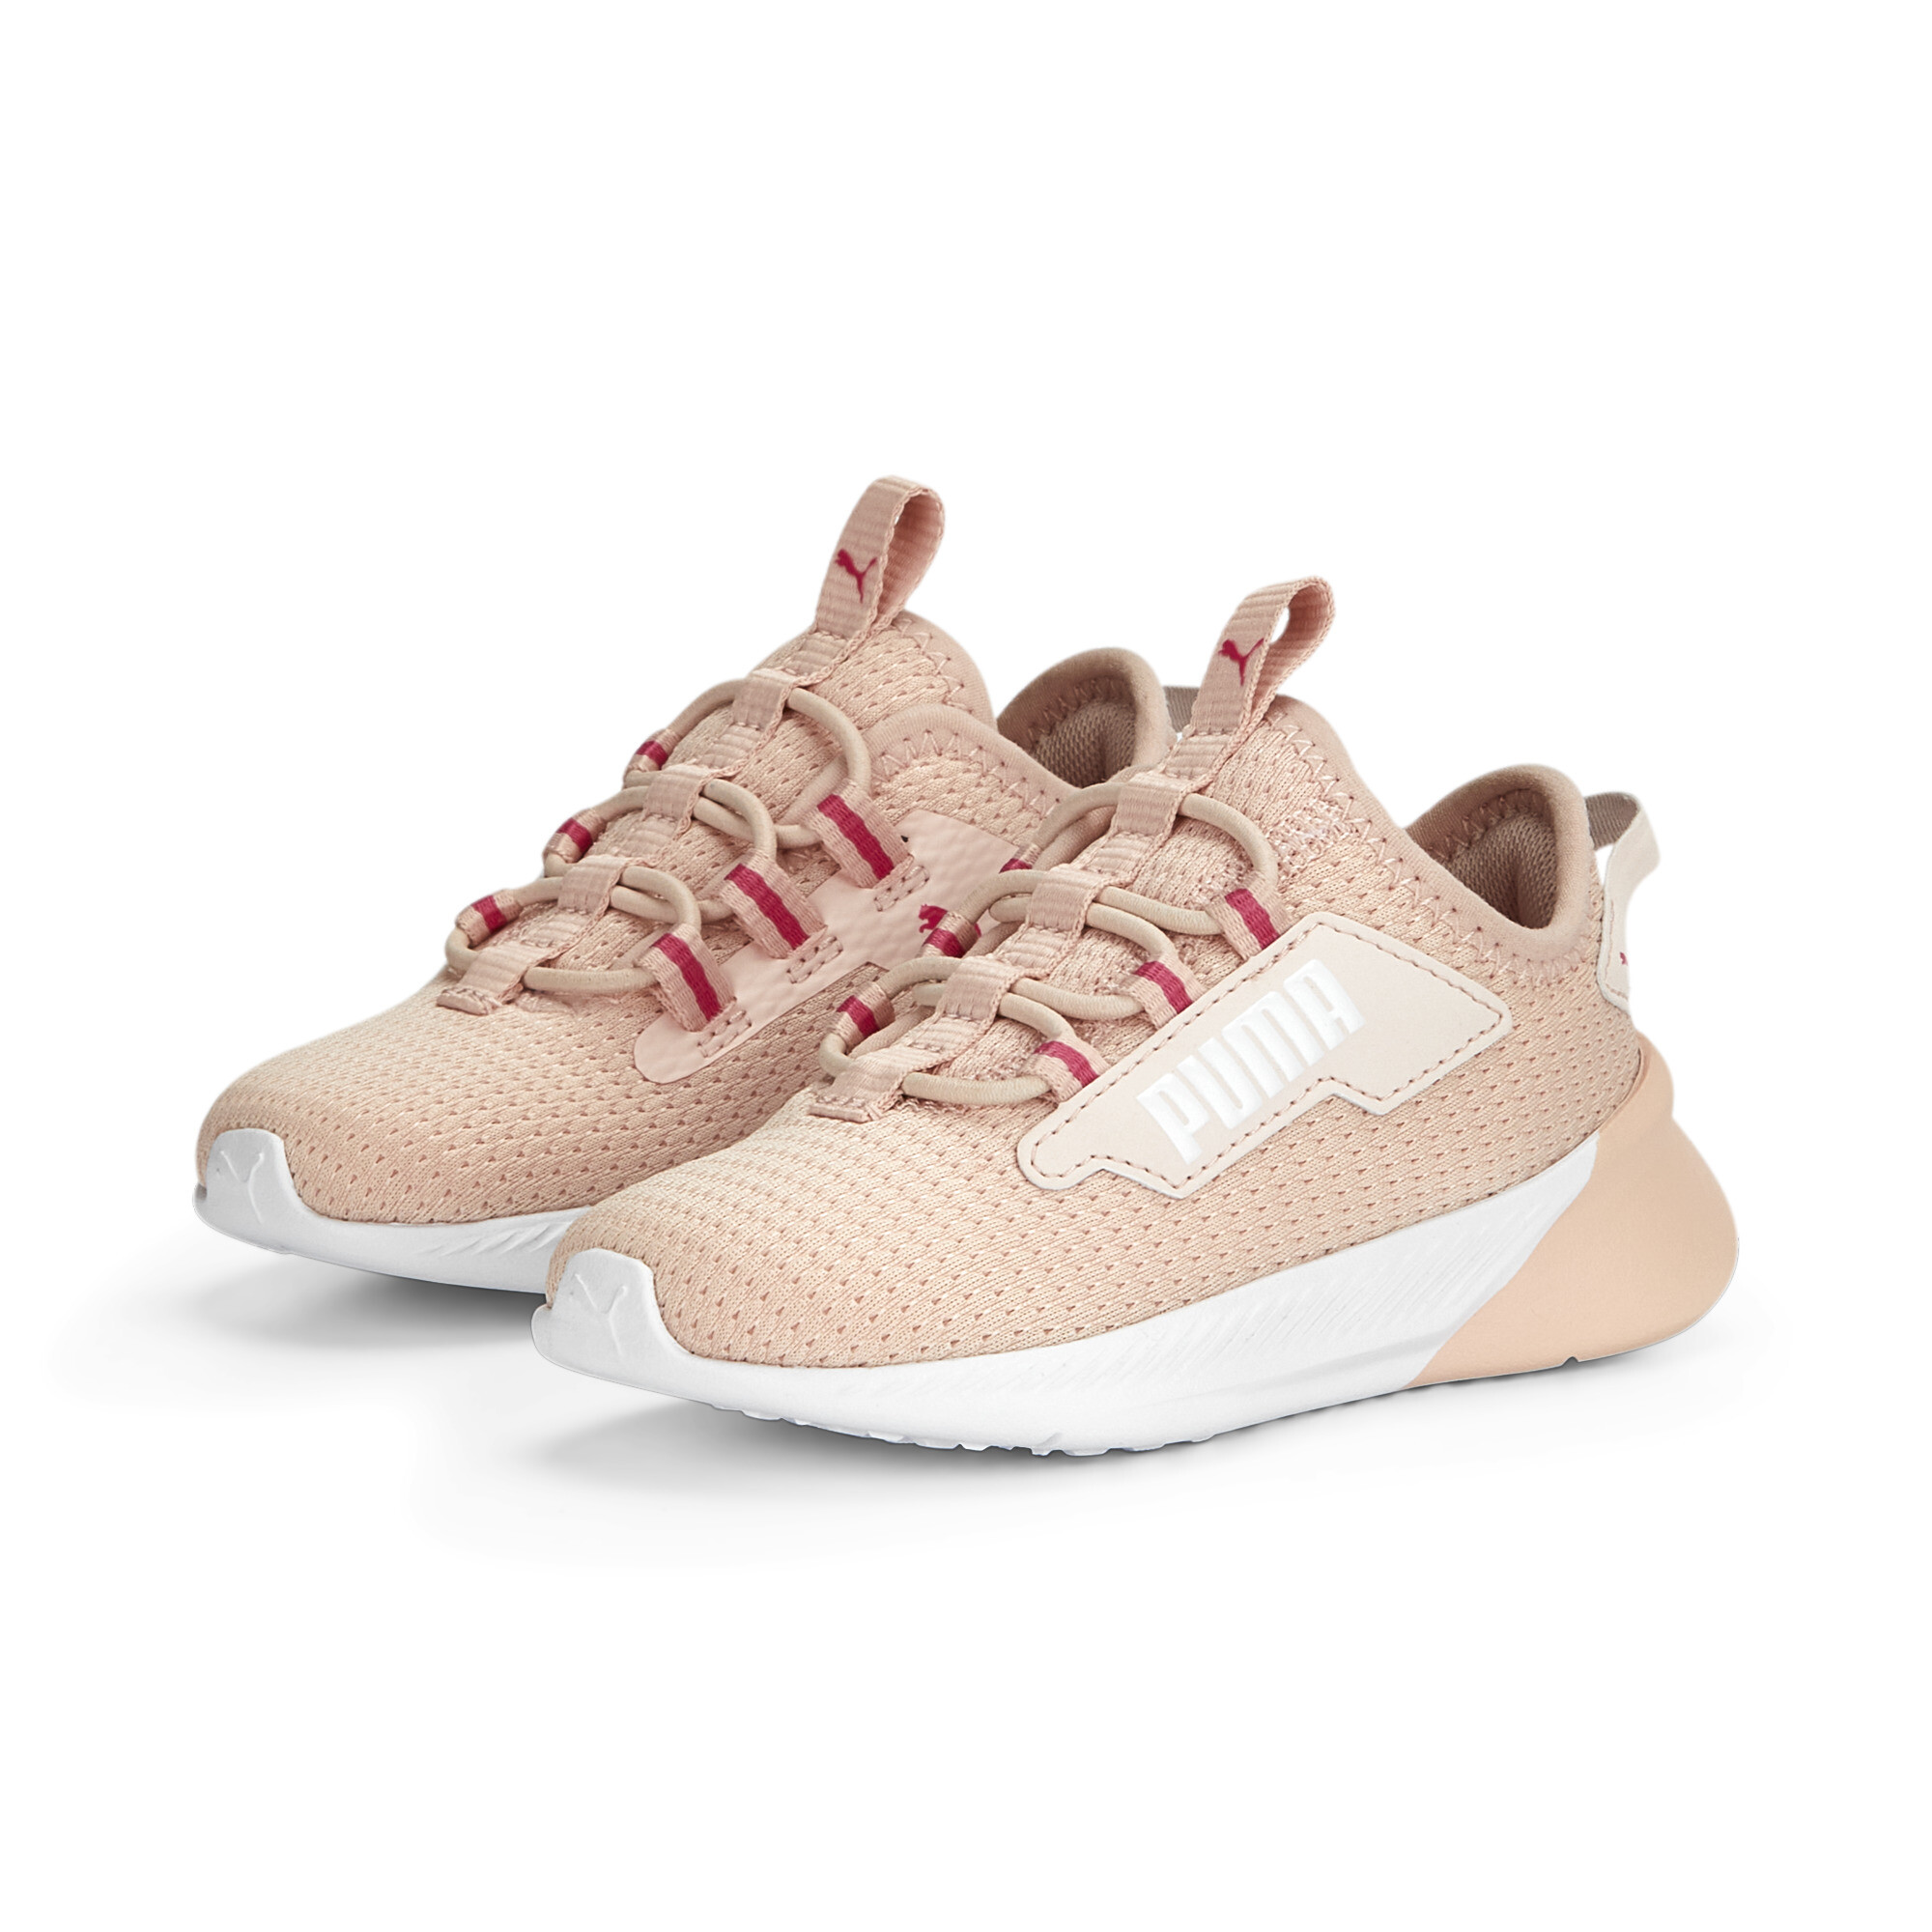 Puma Retaliate 2 AC Sneakers Babies, Pink, Size 20, Shoes